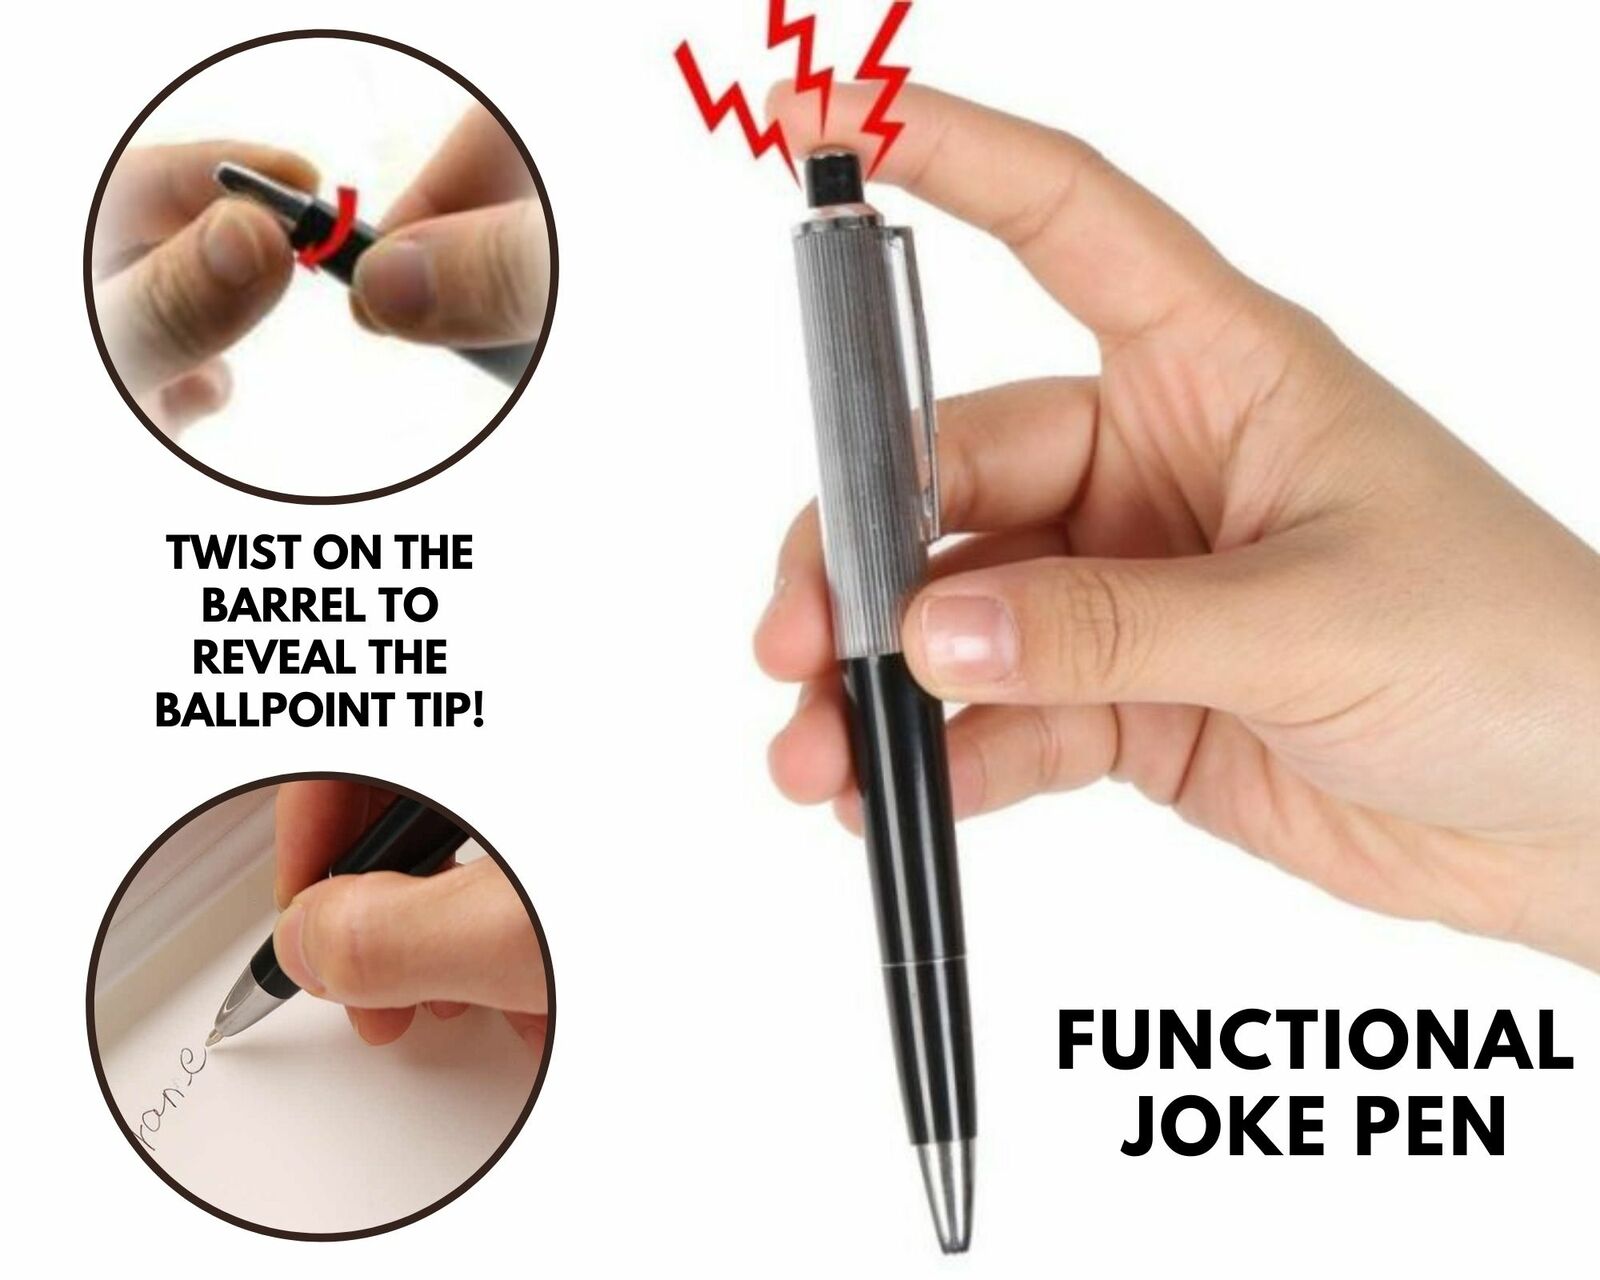 Electric Shock Pen – Funny Practical Joke Prank Novelty Toy April